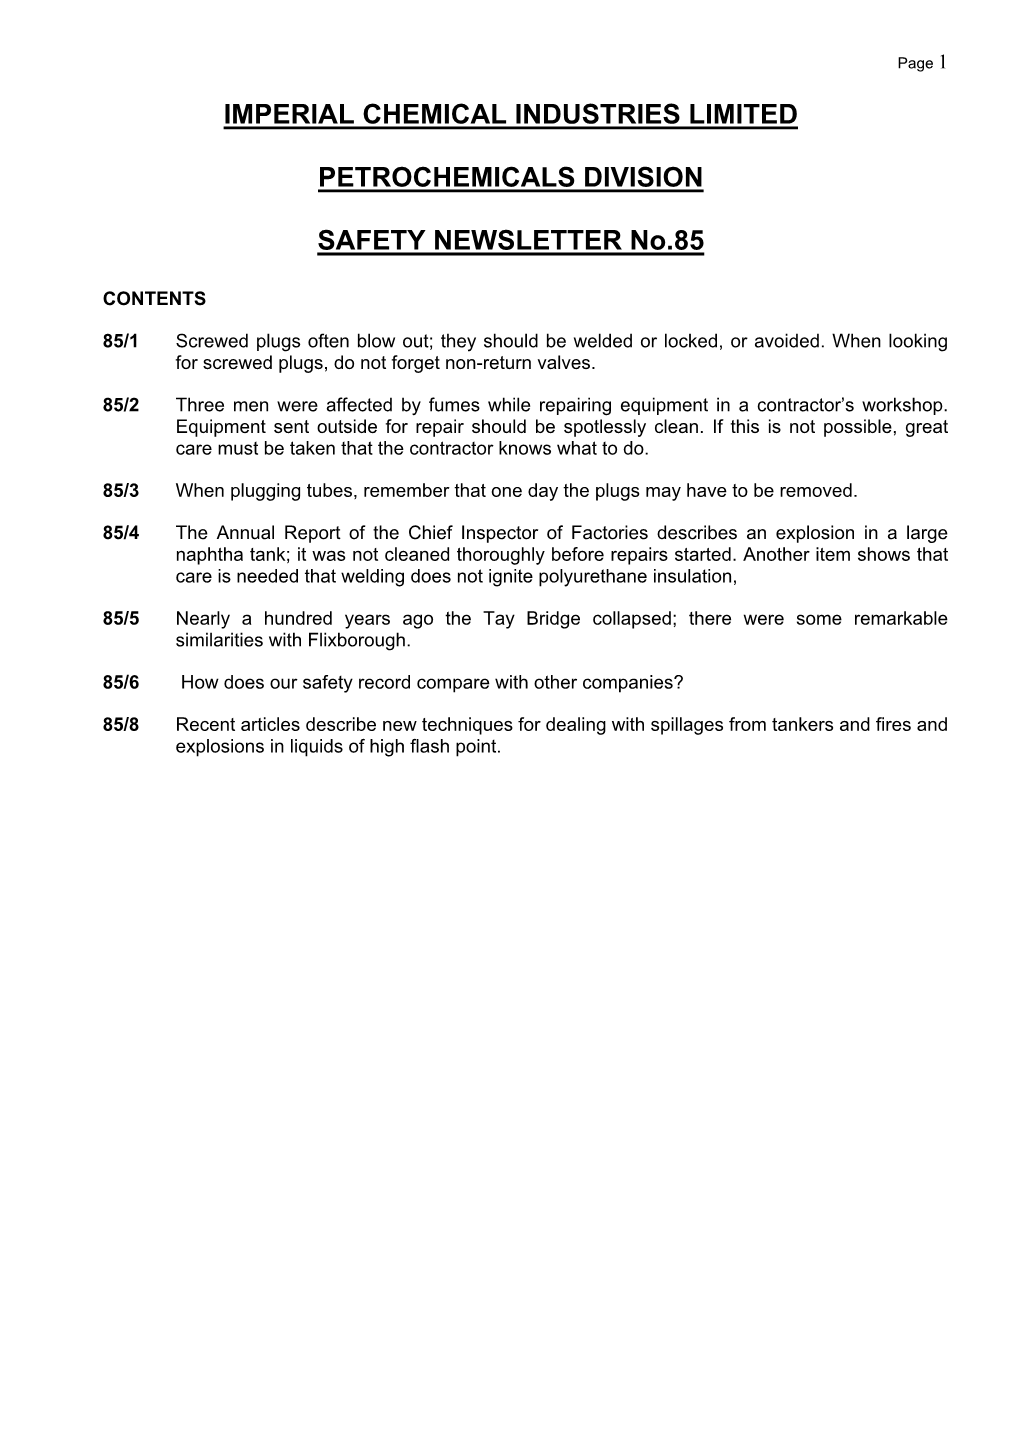 Transcription of ICI Safety Newsletter 85